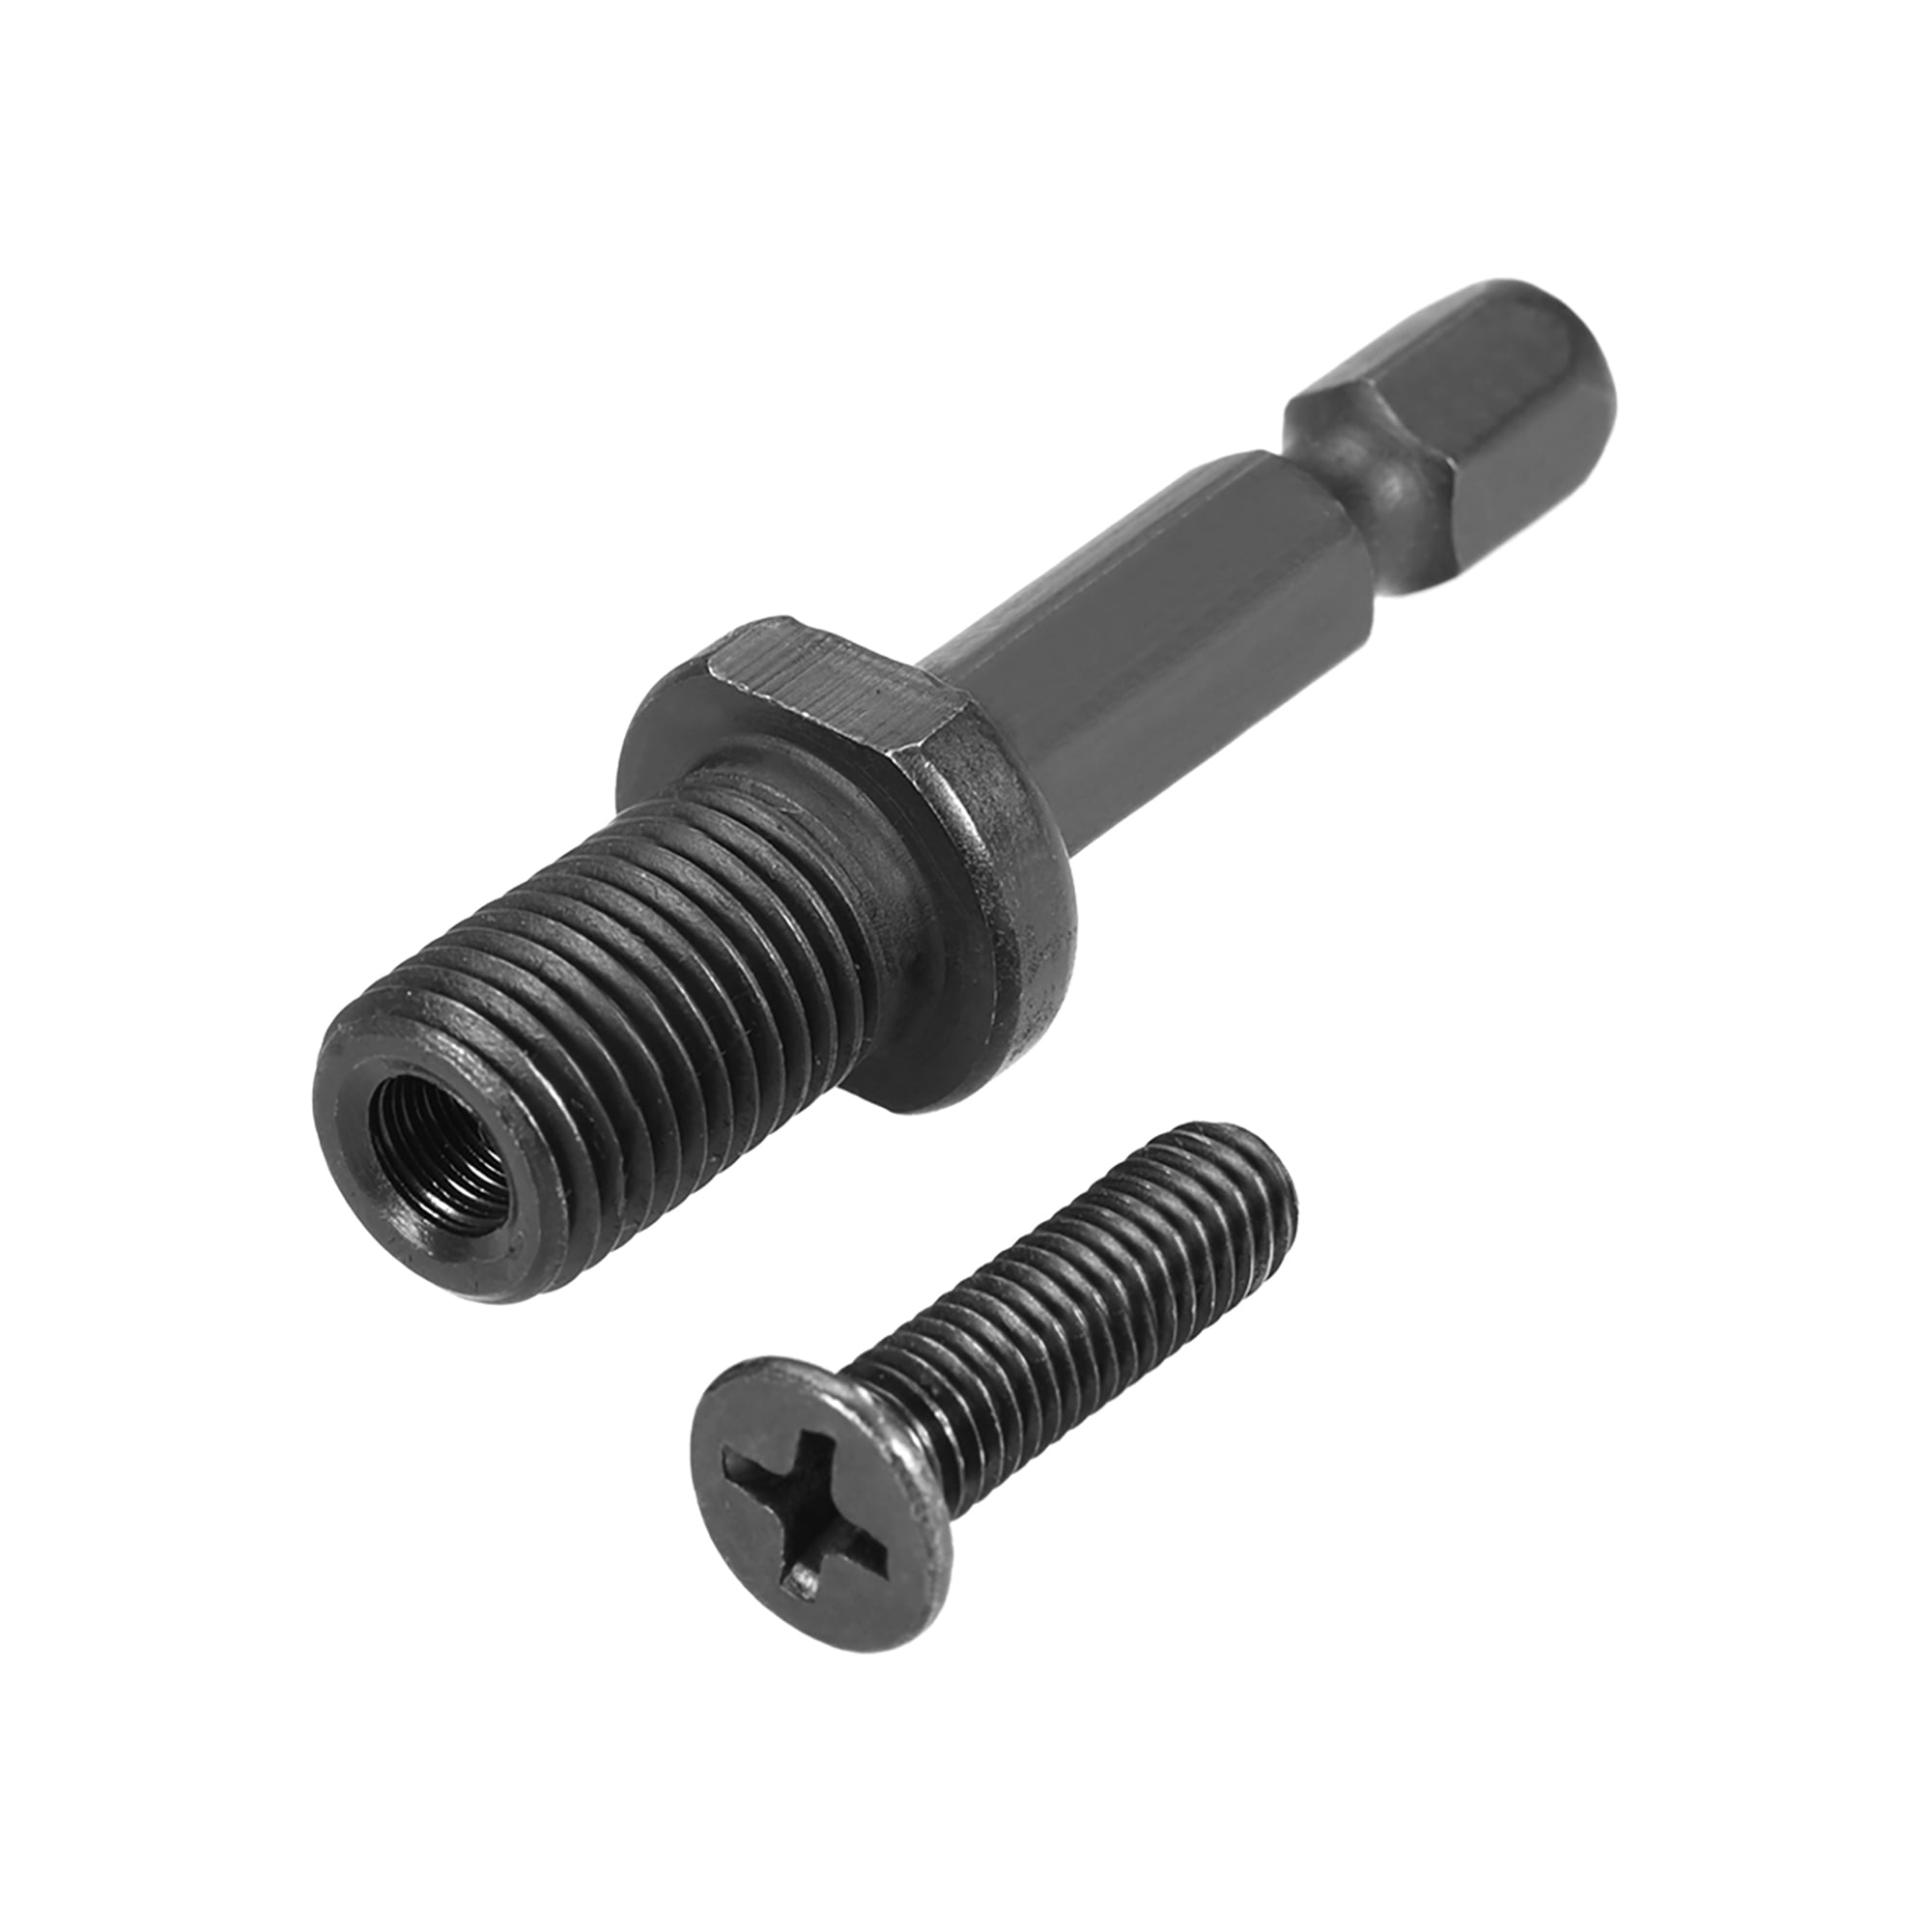 STL file Prym Maxi drill adapter for M8 hex bolt 🔩・3D printer